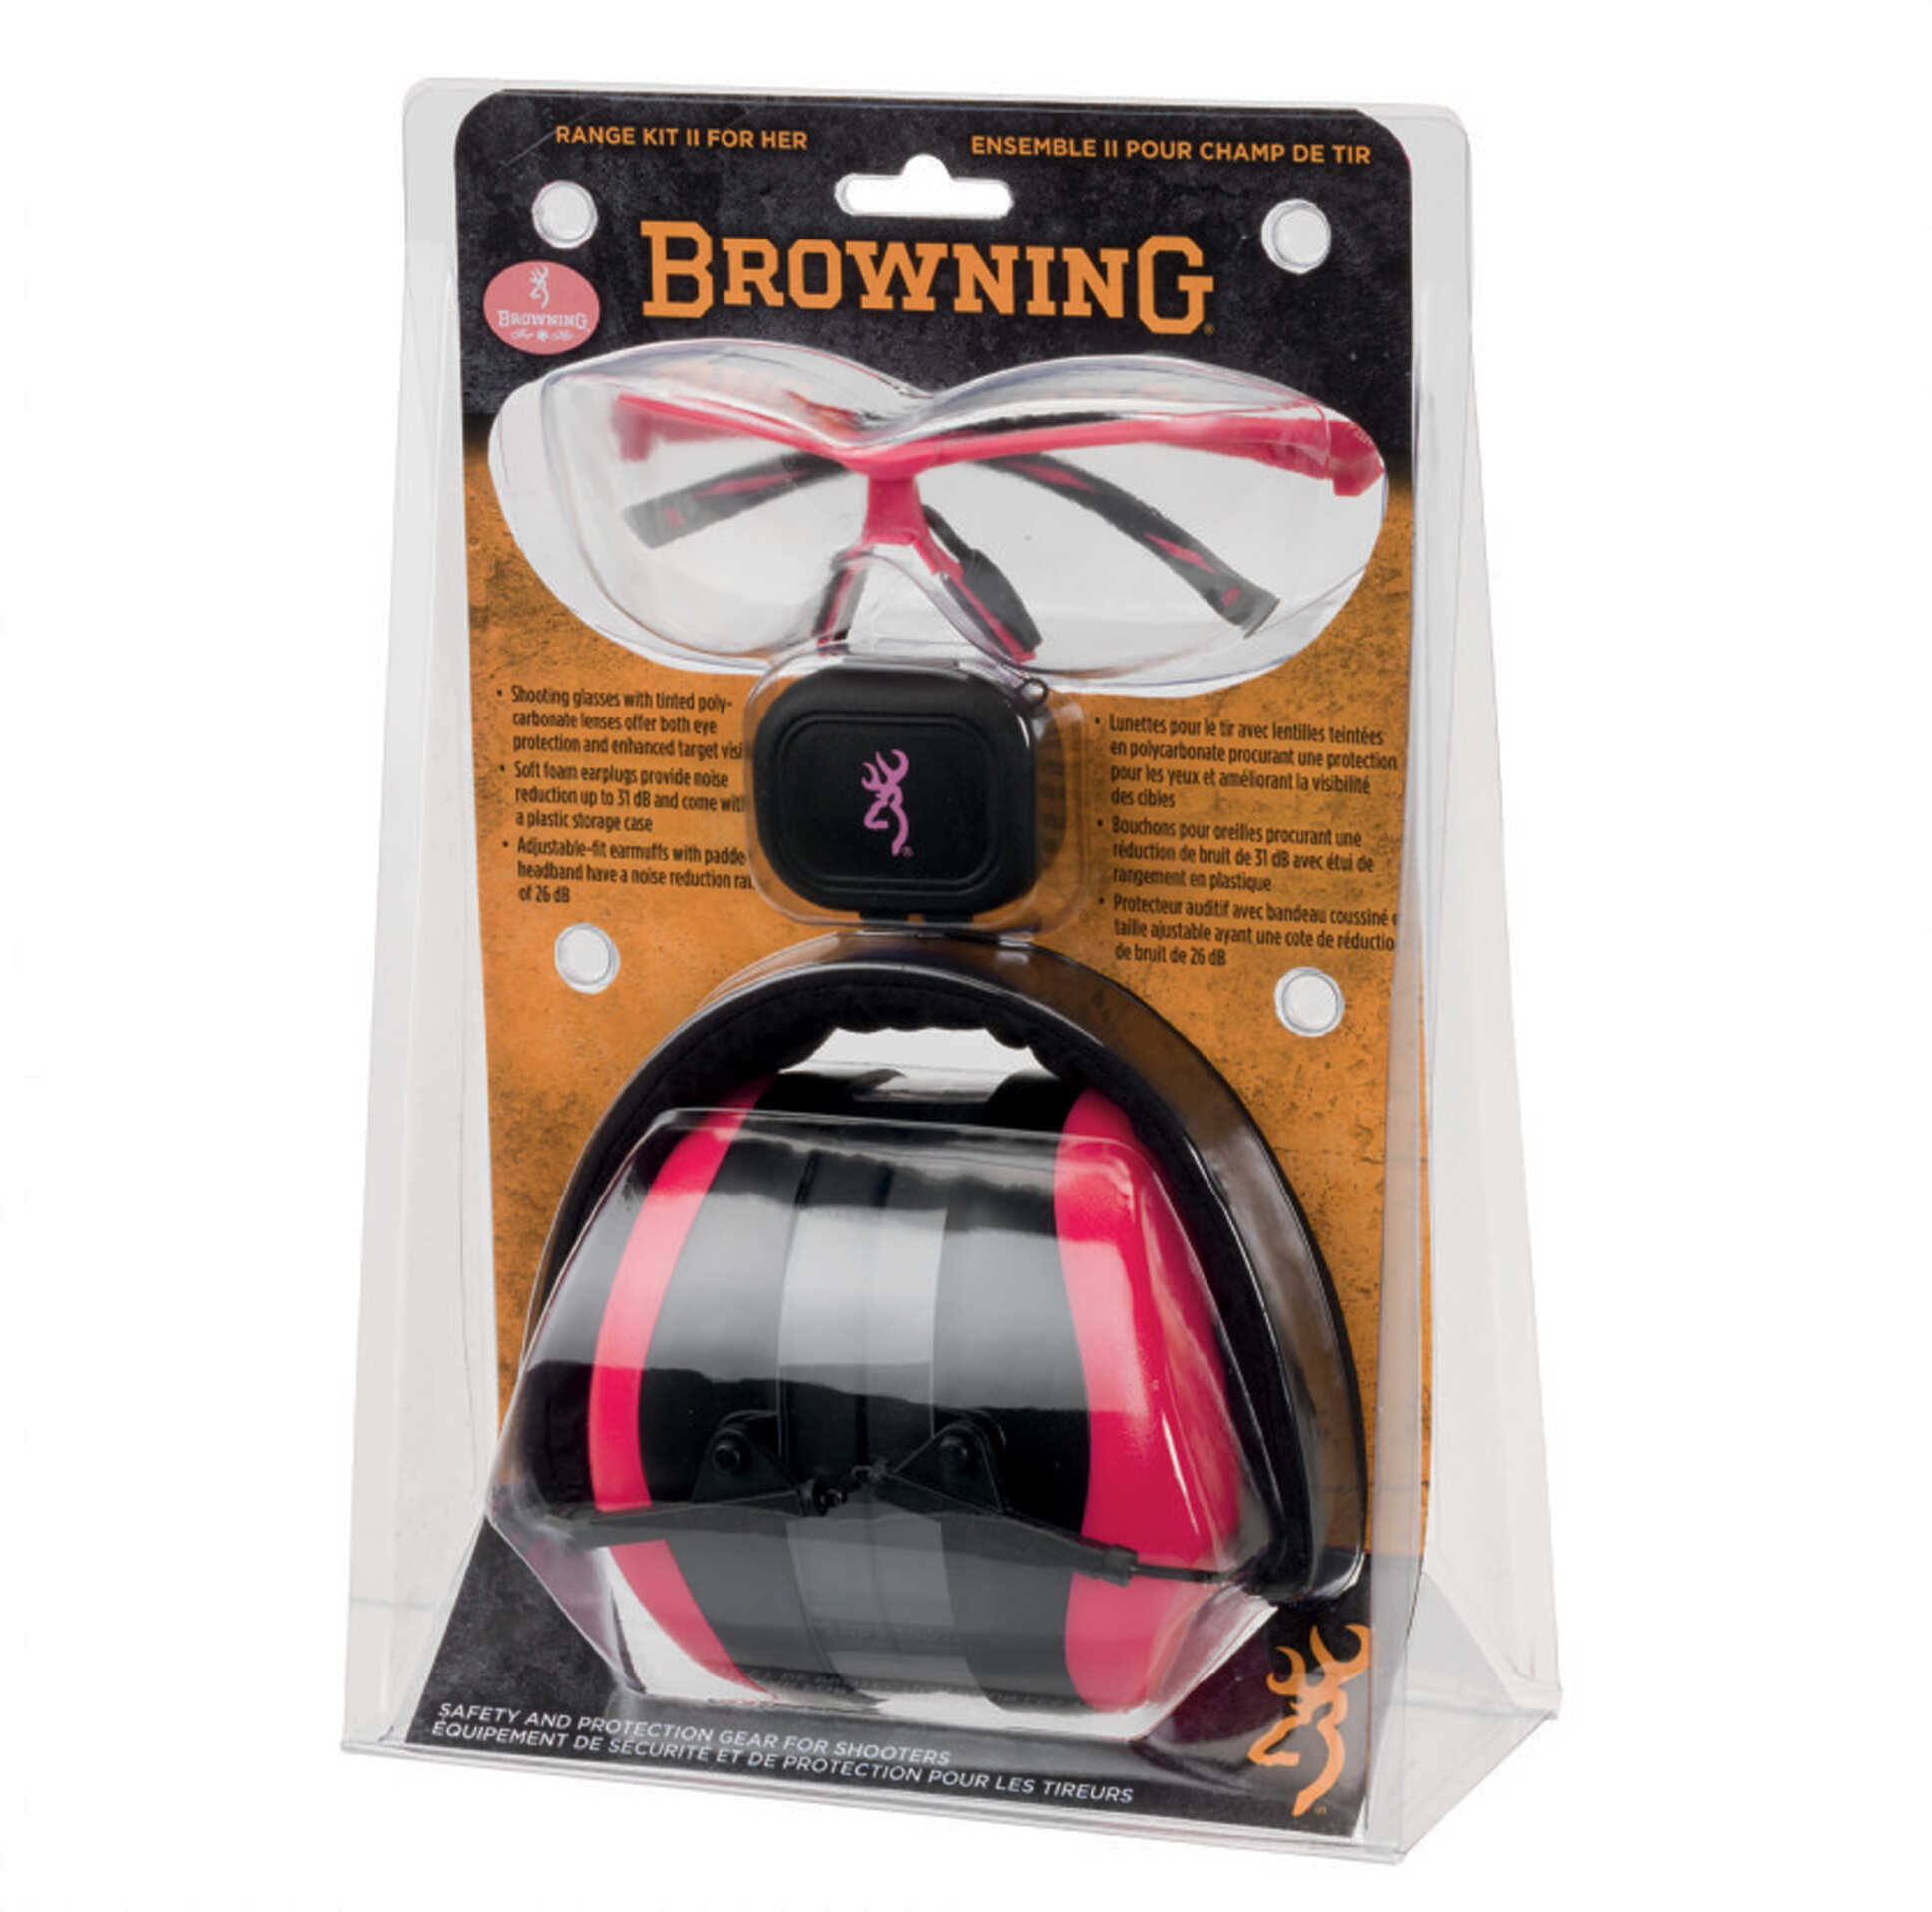 Bro Range Kit For Her Pink Muffs Plugs Glasses